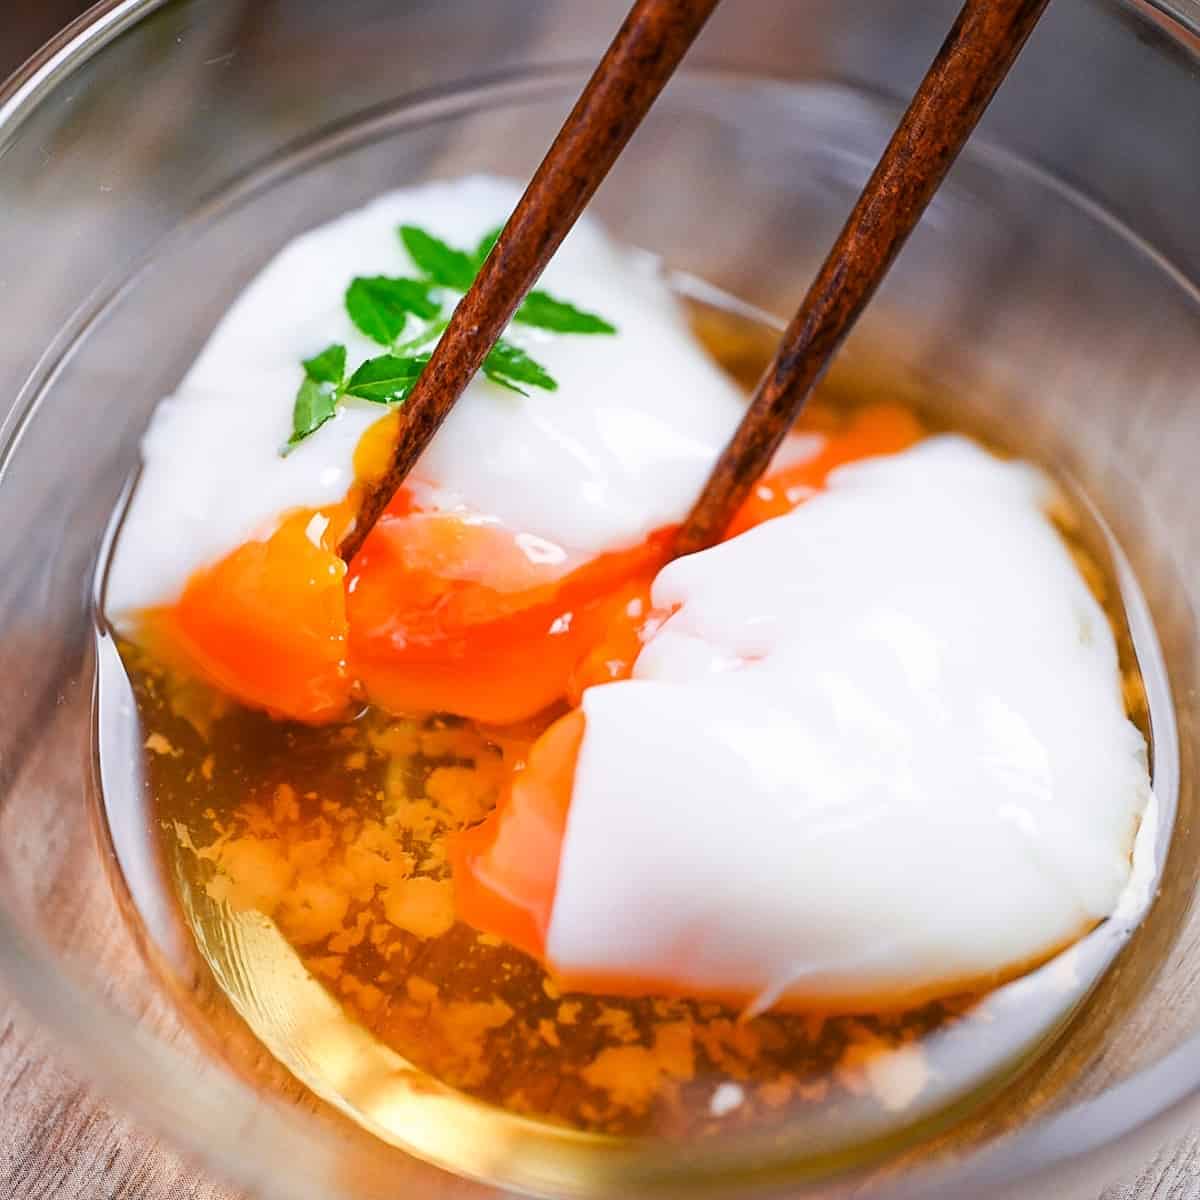 breaking apart onsen tamago (Japanese hot spring egg) with chopsticks to reveal silky yolk